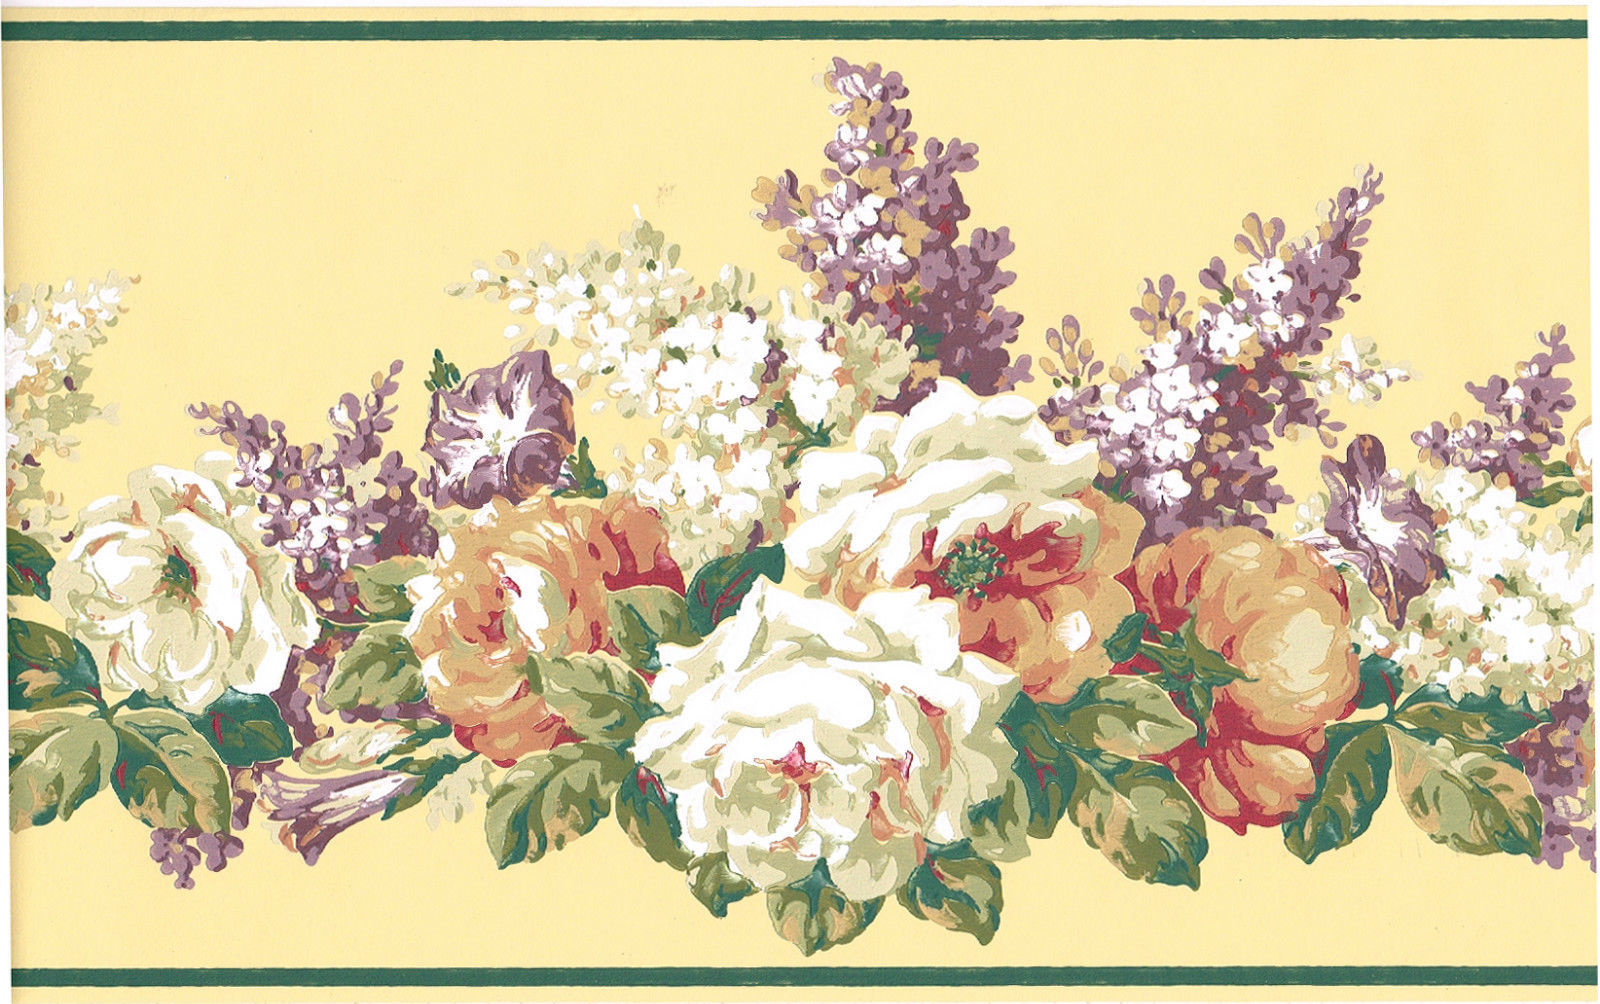  paper border floral wallpaper border pattern eh99816 colors green edge